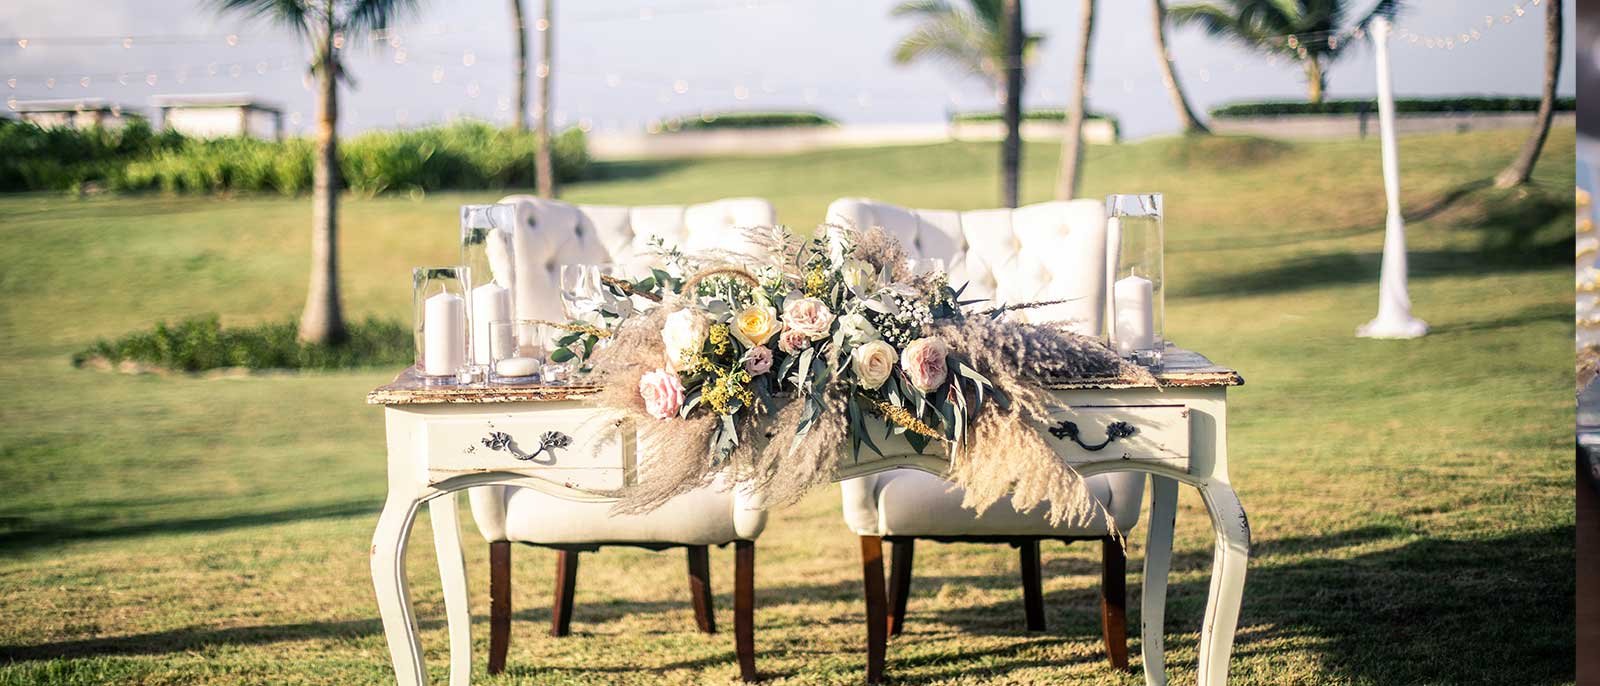 Hard-Rock-Hotel-Cancun-free-spirit-inspiration-ceremony-bride-groom-table.jpg